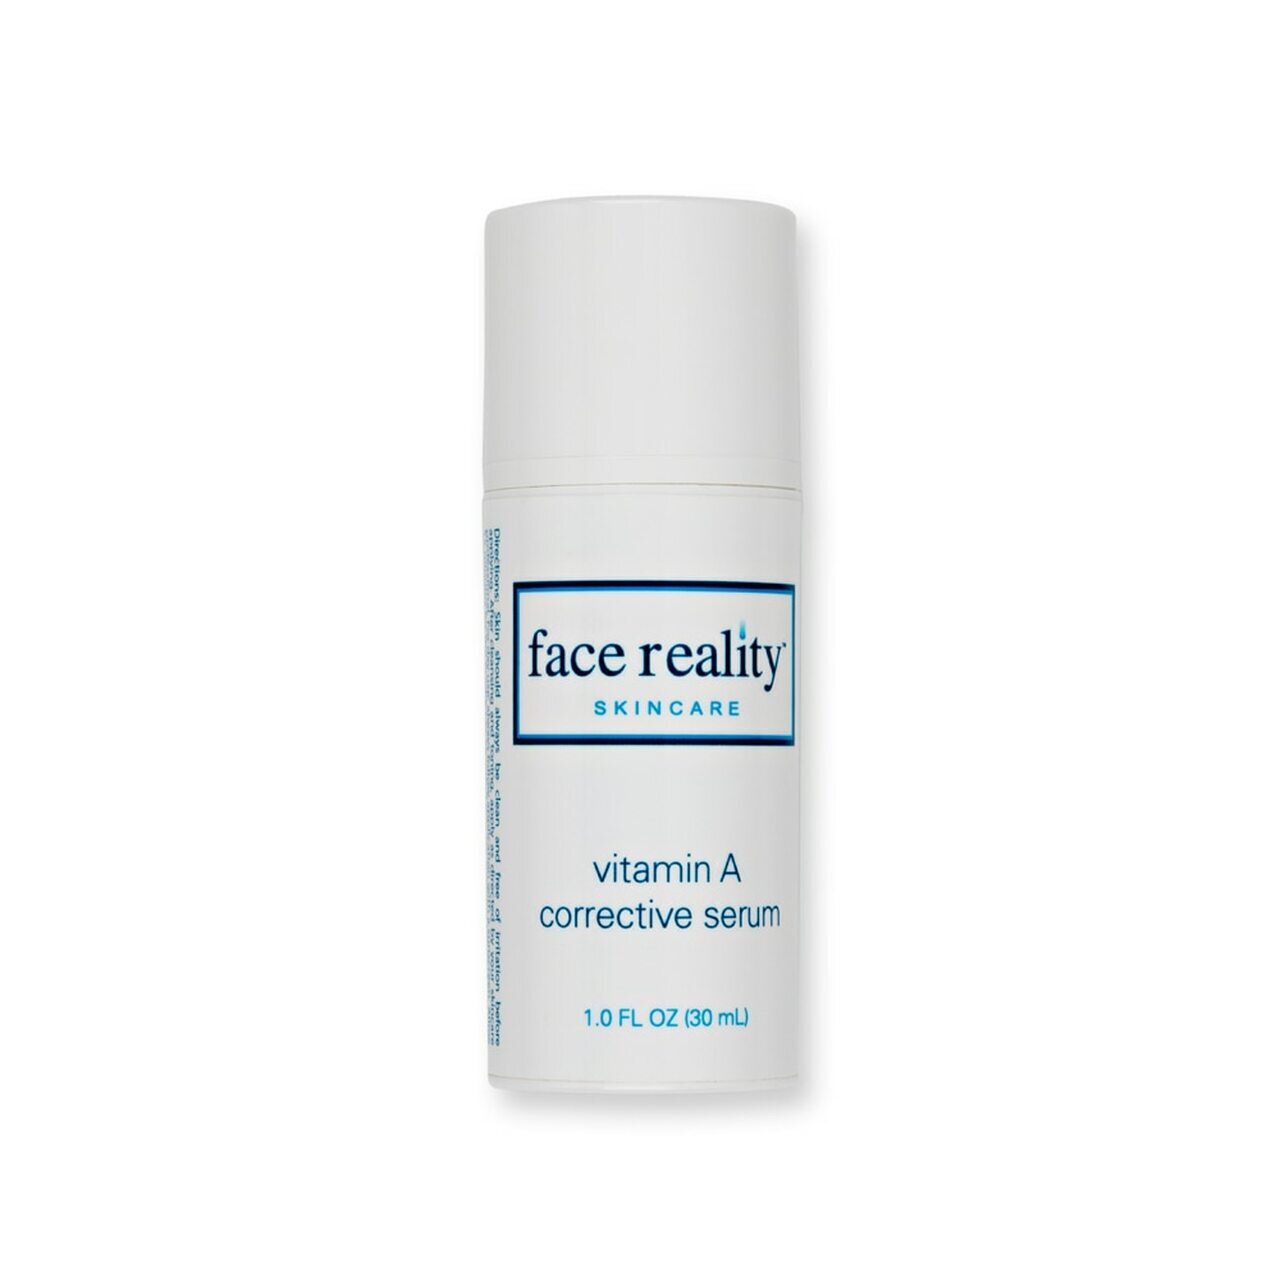 Face Reality Skincare Vitamin A Corrective Serum, Rejuvenate Your Skin